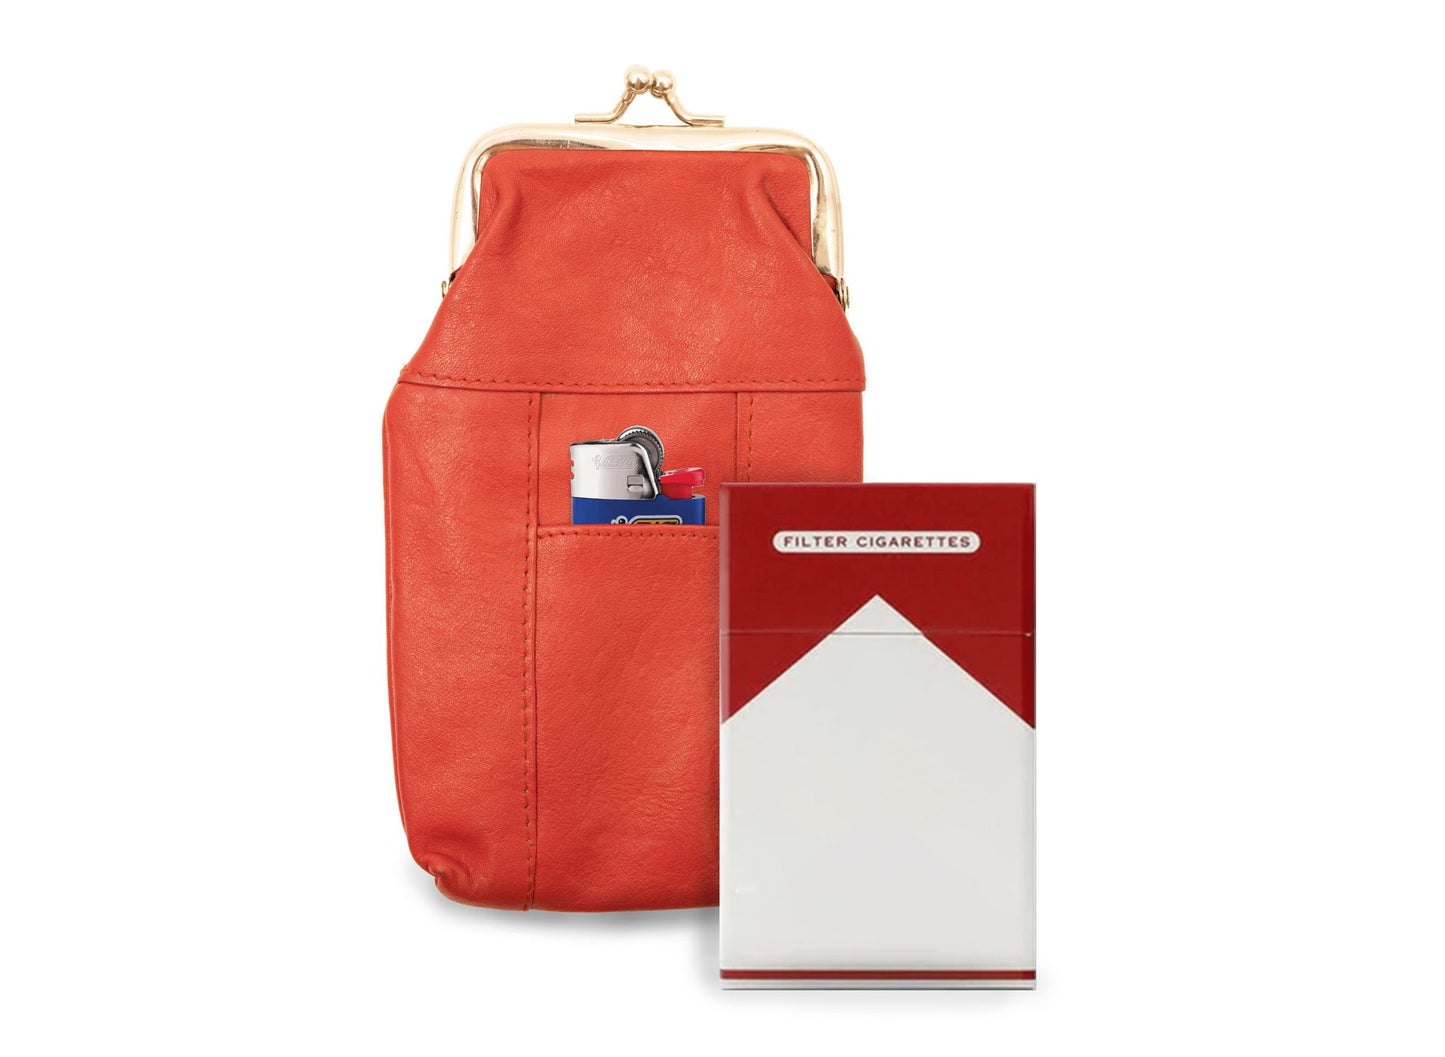 Genuine Leather Cigarette Soft Case Tobacco Holder for Men or Women